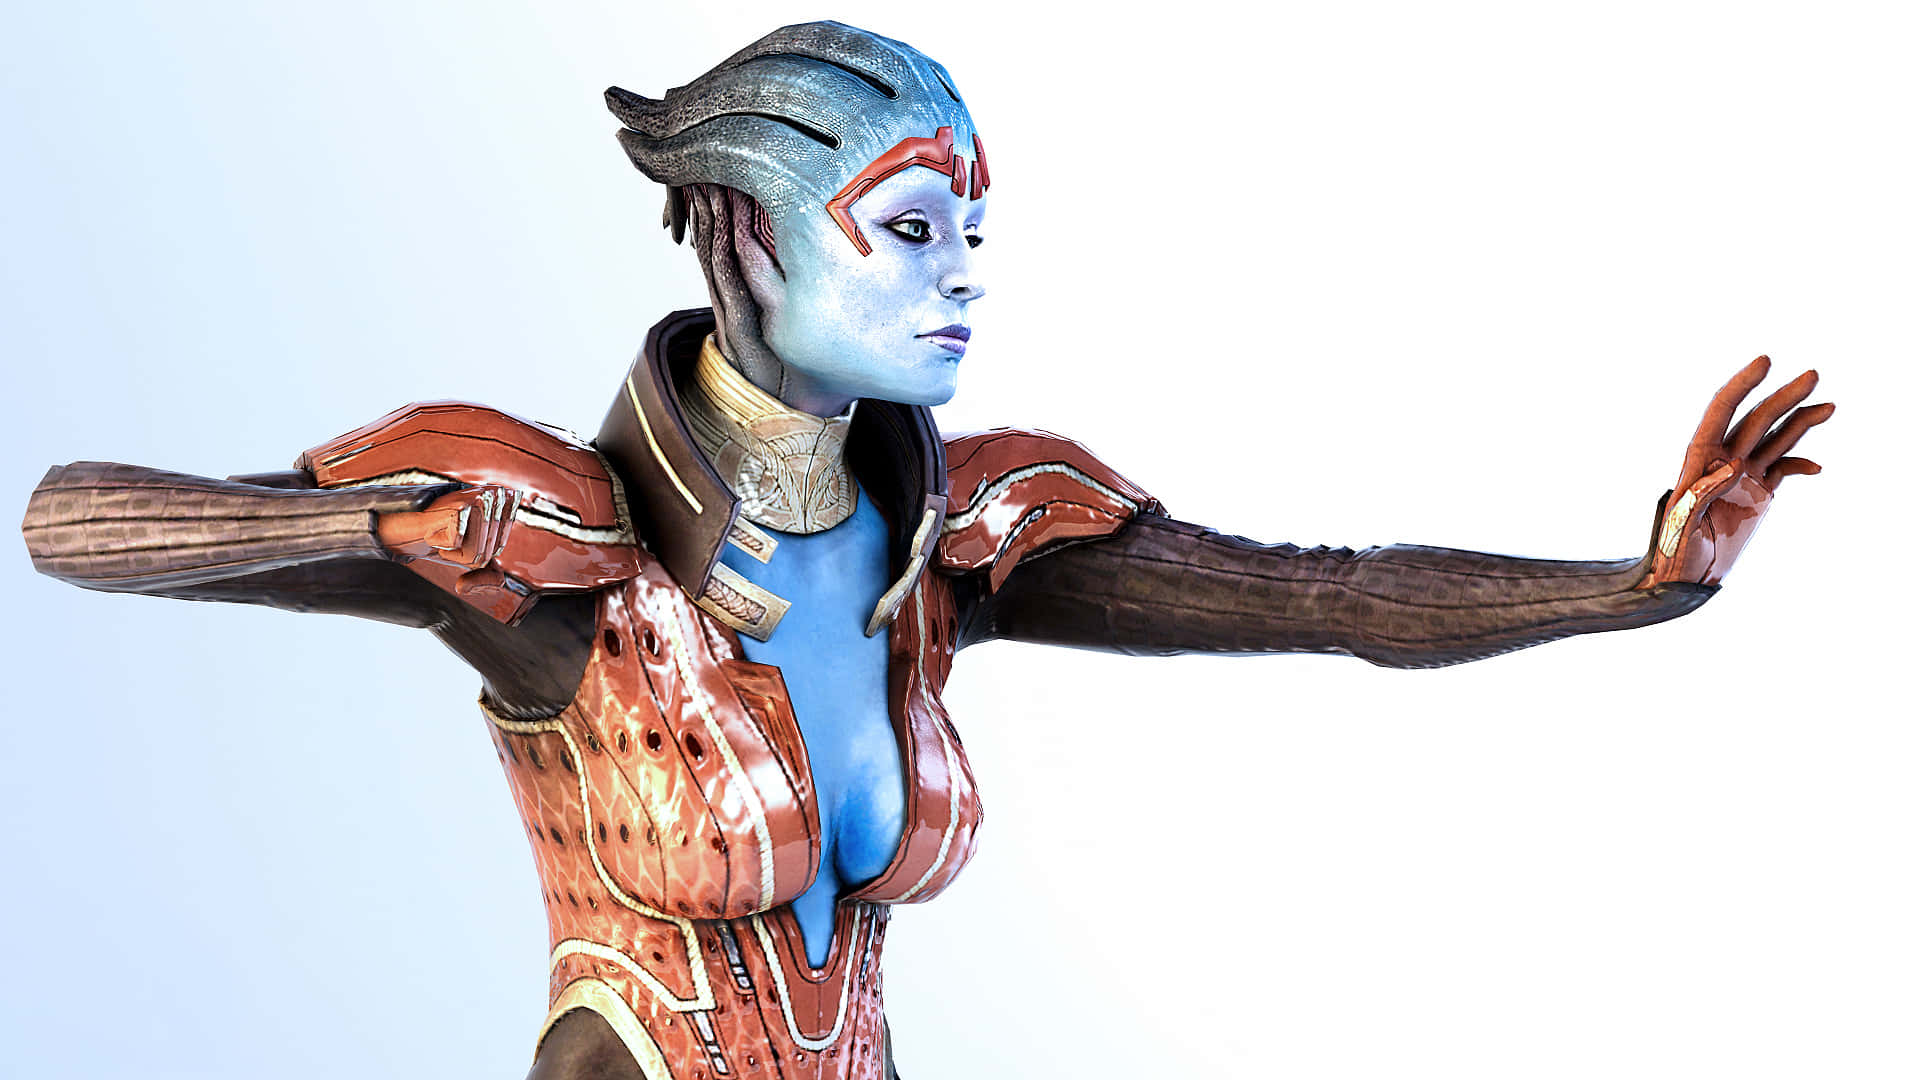 Samara, the powerful Justicar in Mass Effect, meditating against a futuristic cityscape. Wallpaper